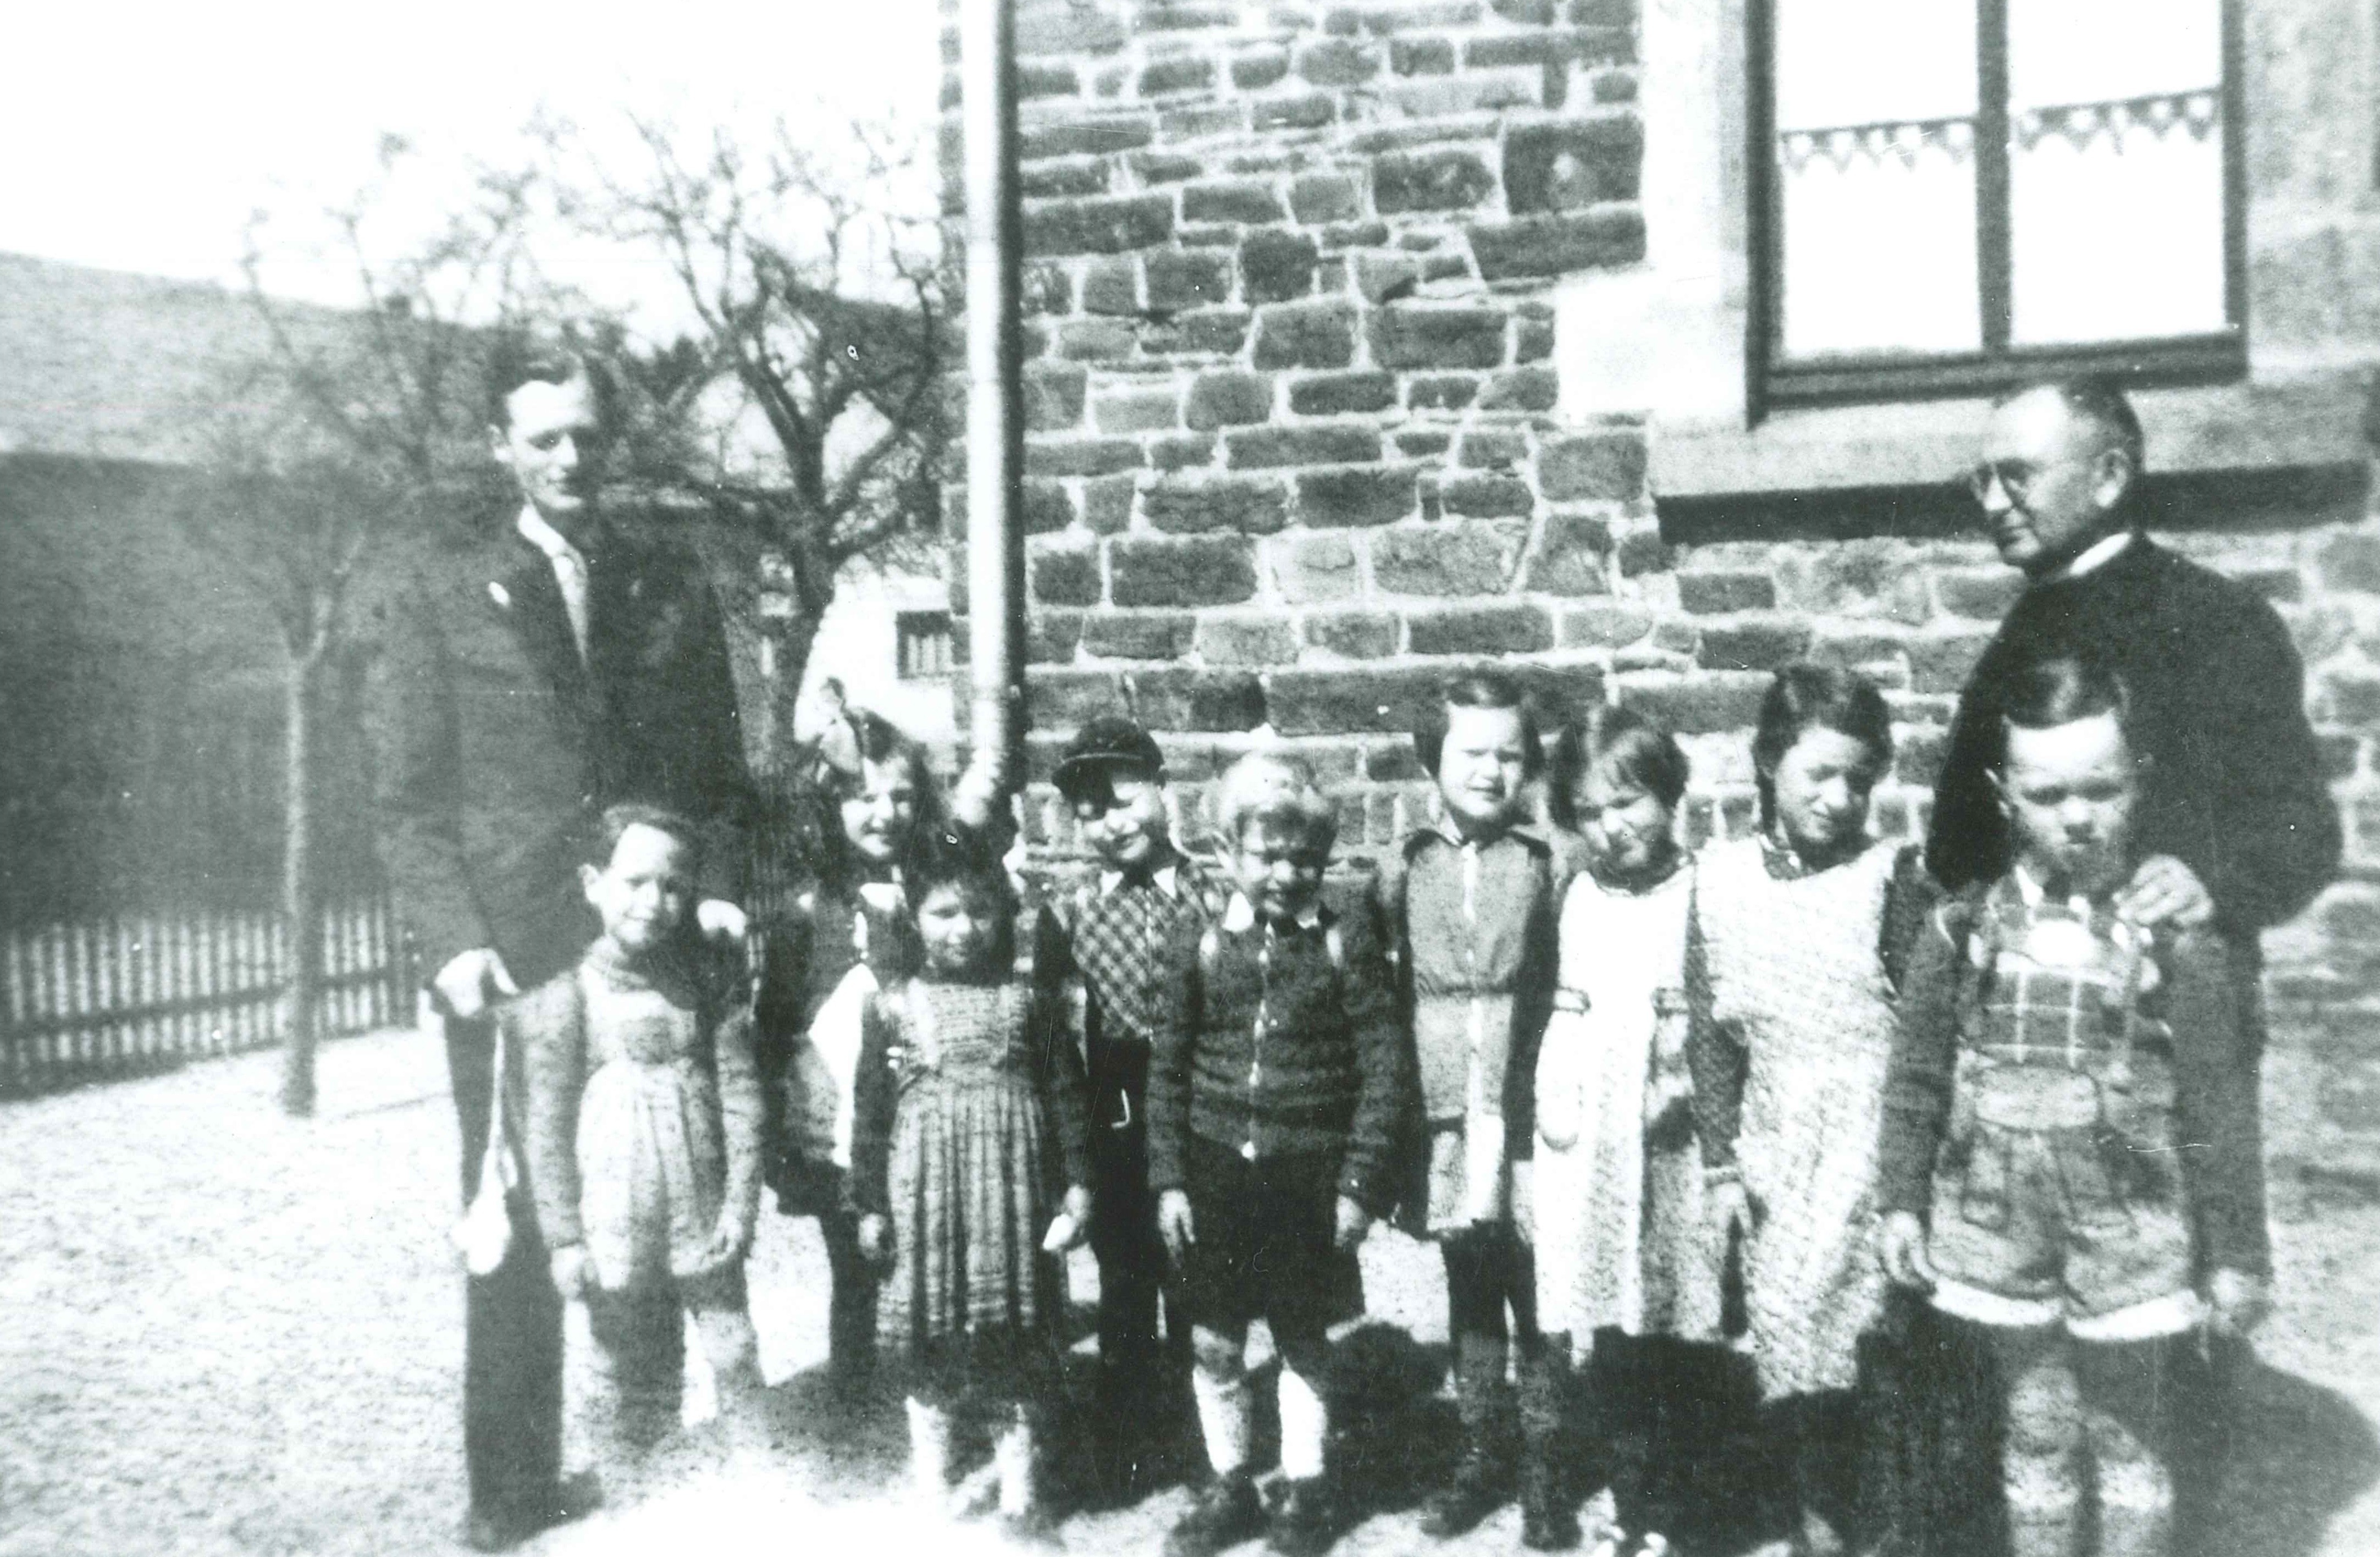 Klassenfoto, Katholische Schule "Schönblick", Bendorf-Stromberg, 1954 (REM CC BY-NC-SA)